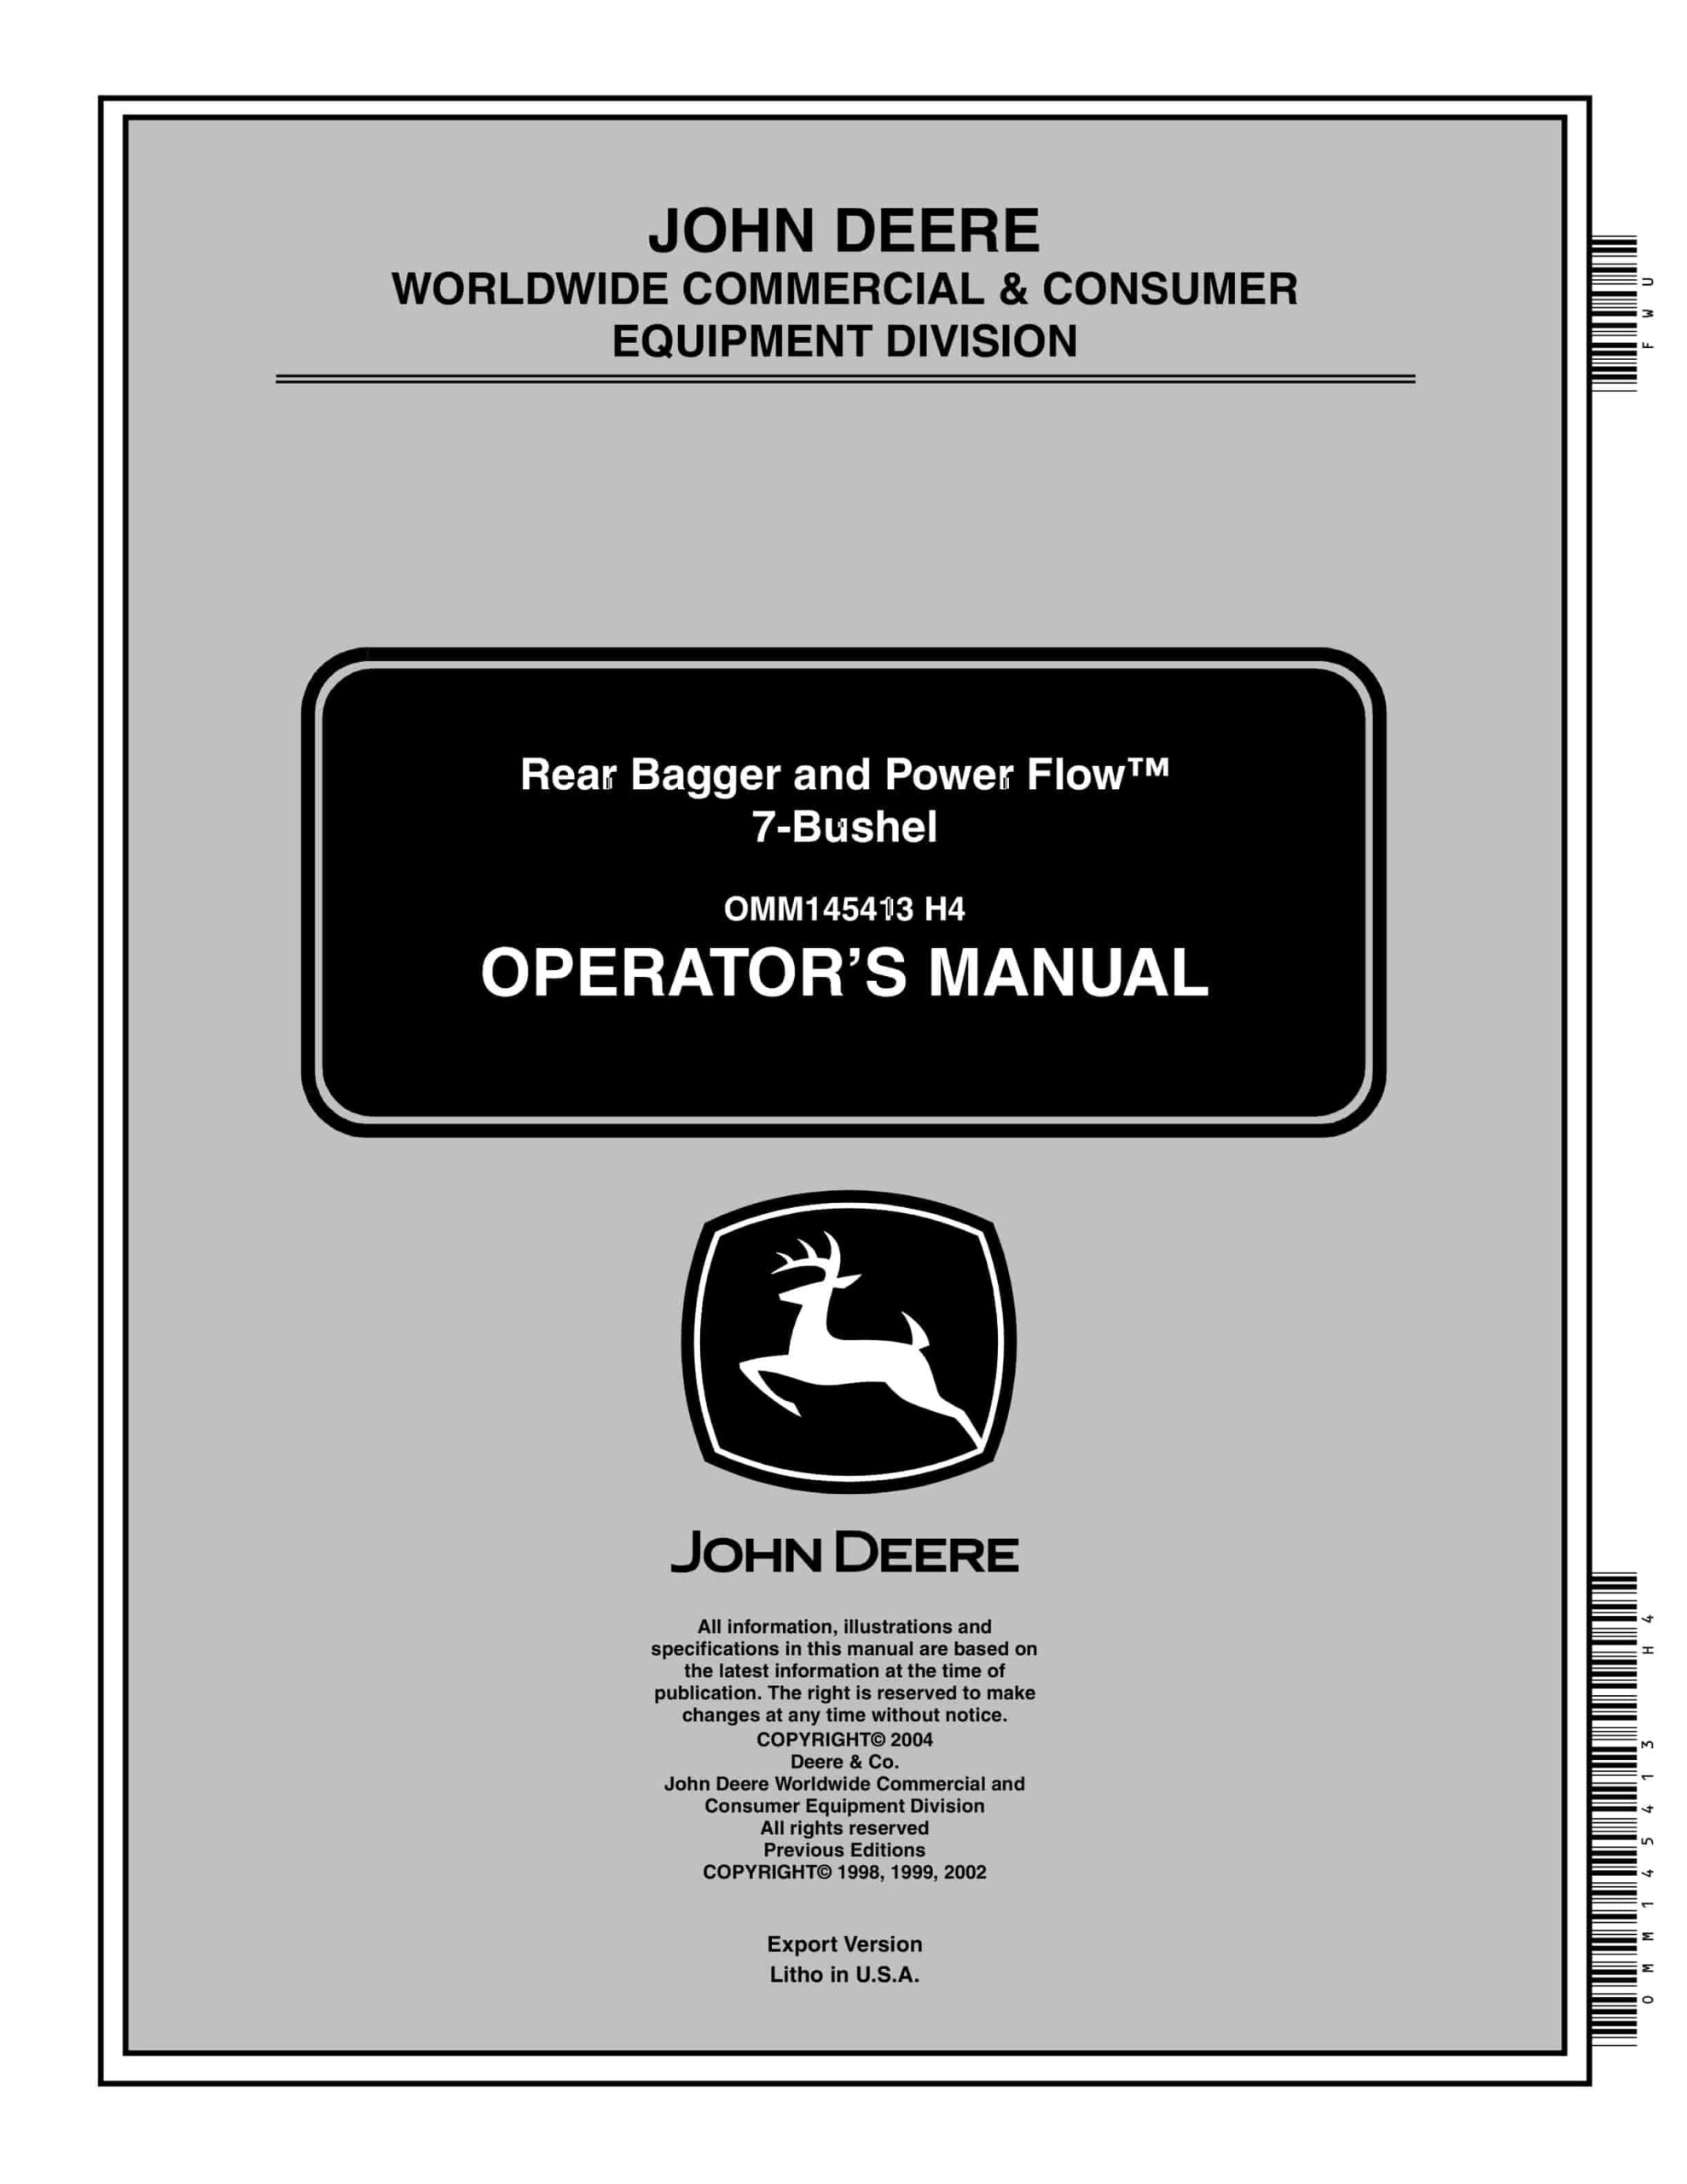 John Deere 7-Bushel Rear Bagger and Power Flow Operator Manual OMM145413-1